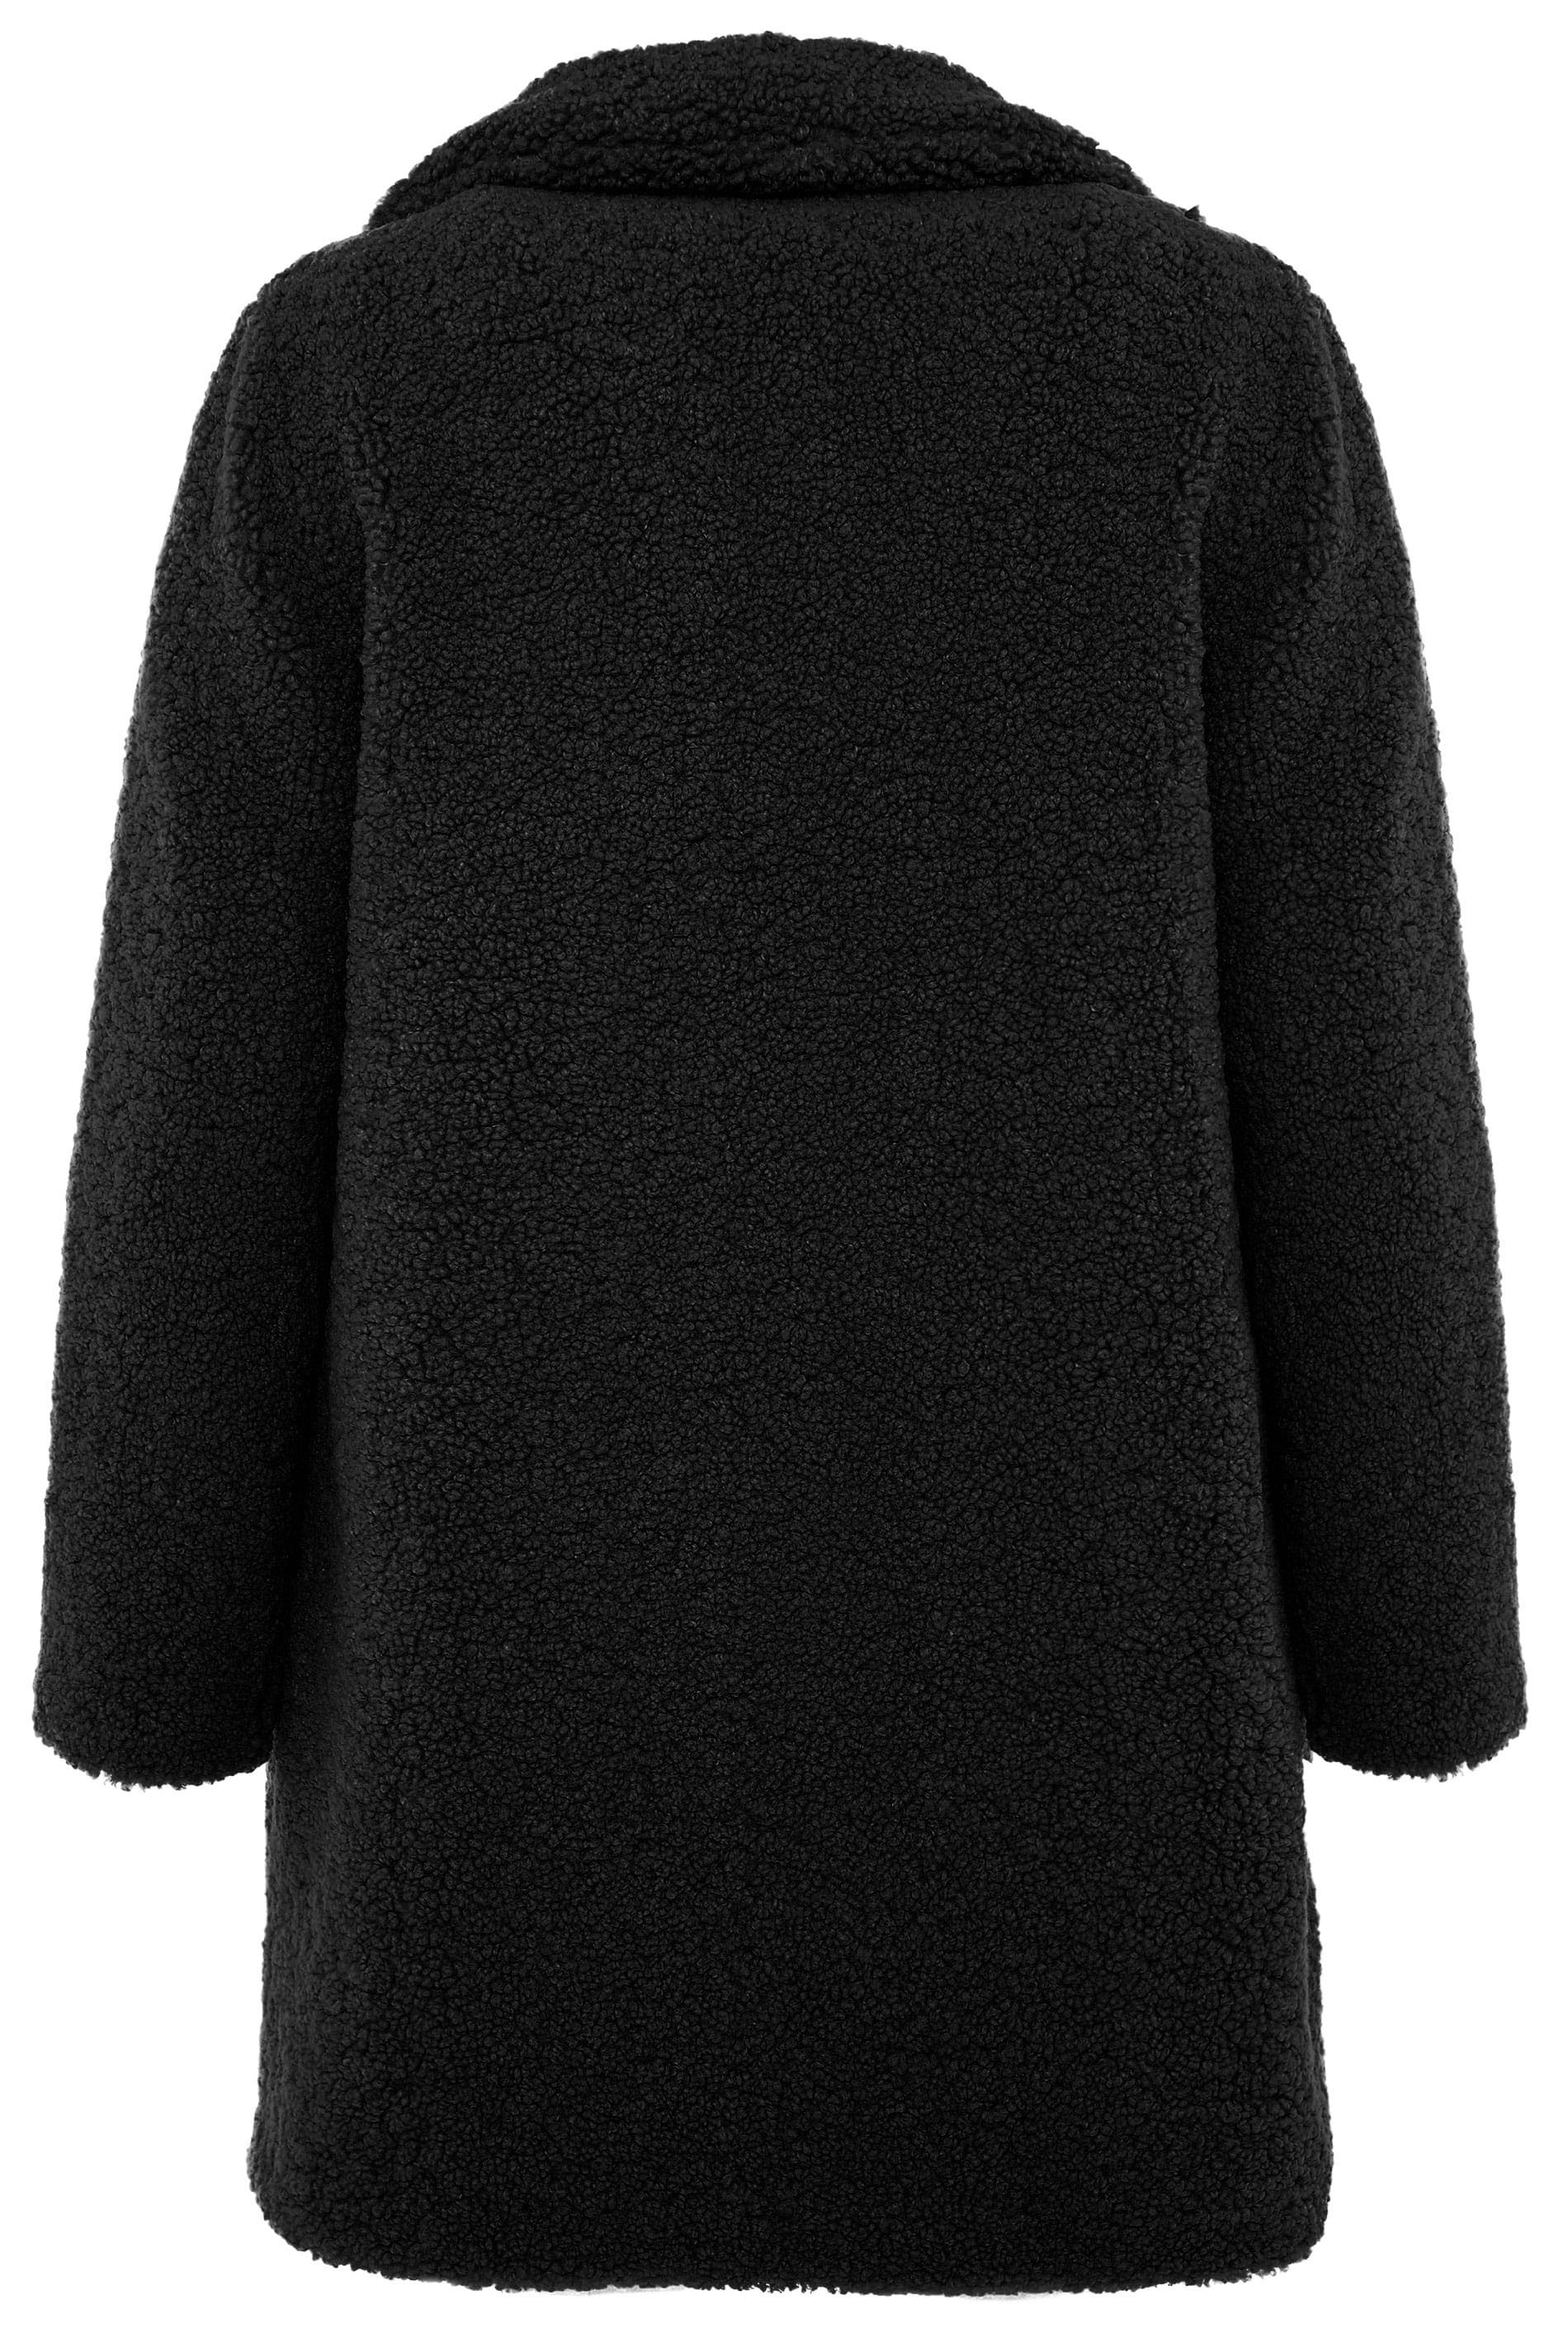 Black Teddy Coat | Yours Clothing